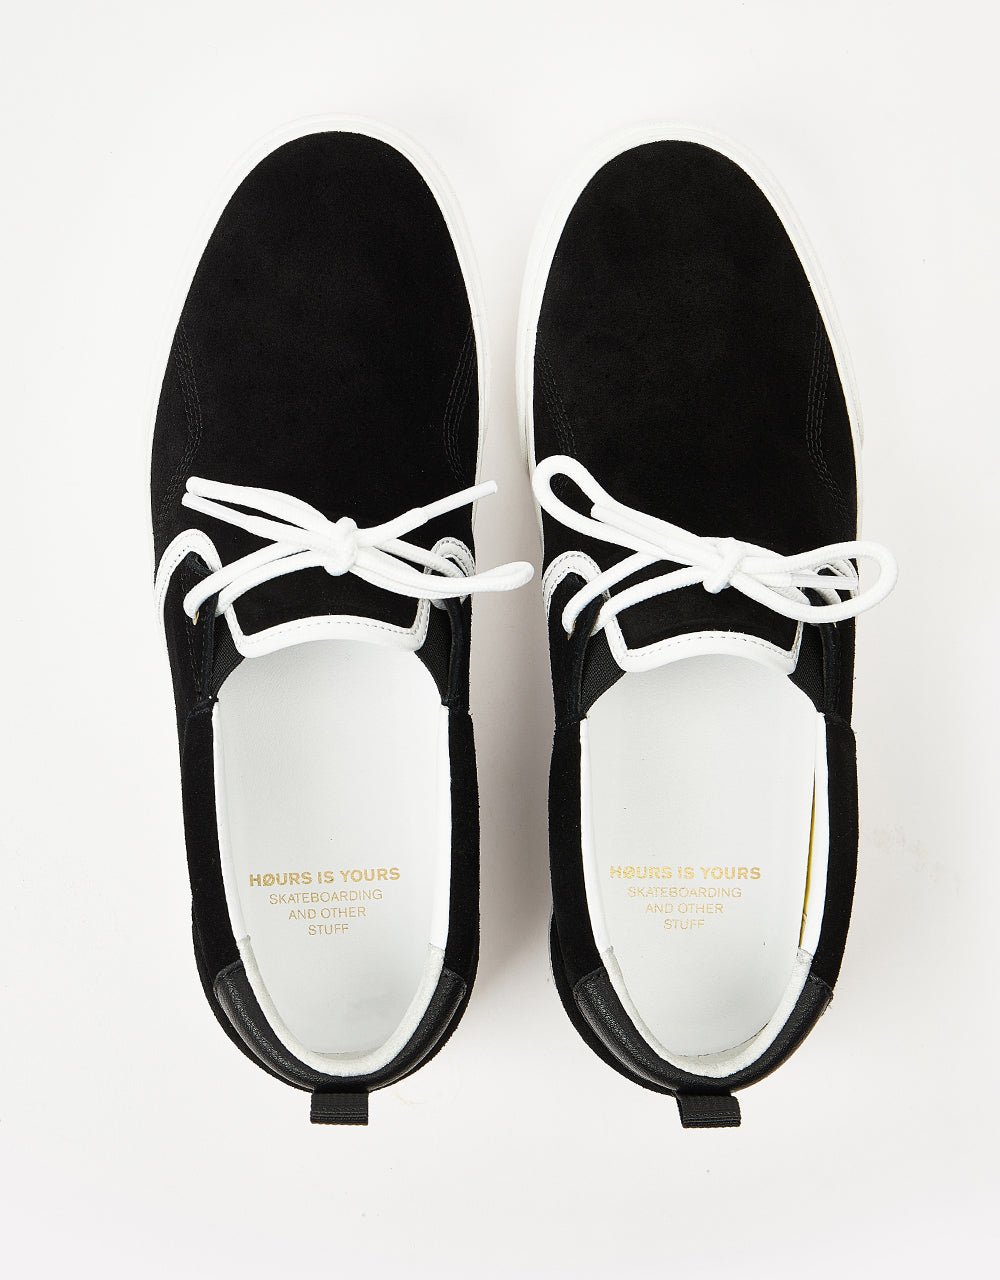 HØURS IS YOURS Callio S77 Skate Shoes - Classic Black